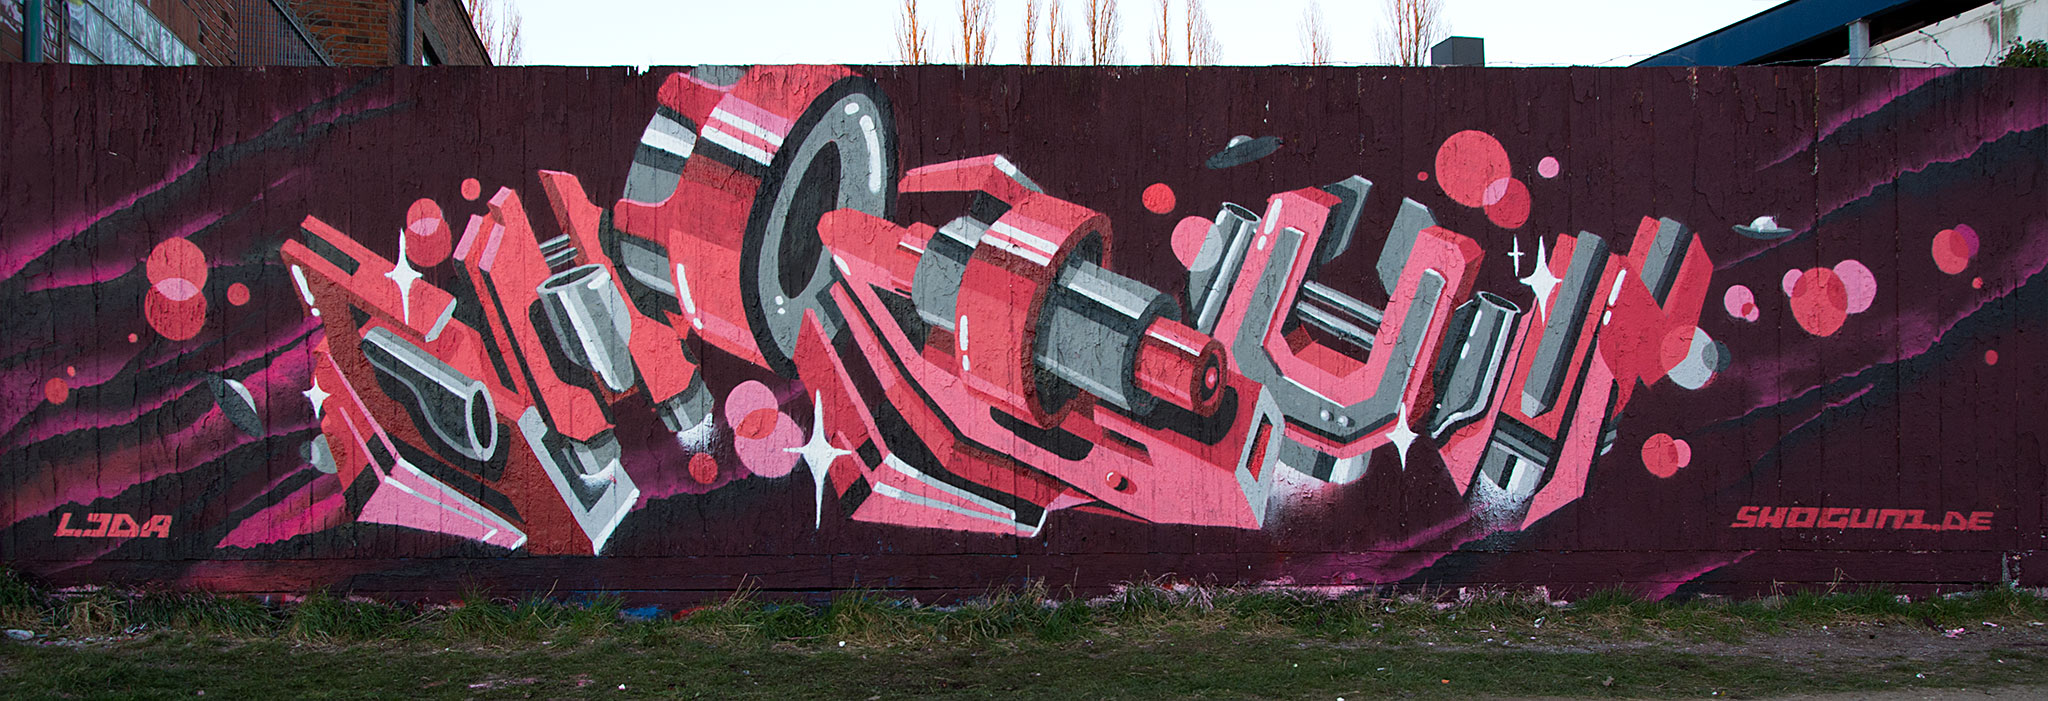 shogun_graffiti_luebeck_2015_1